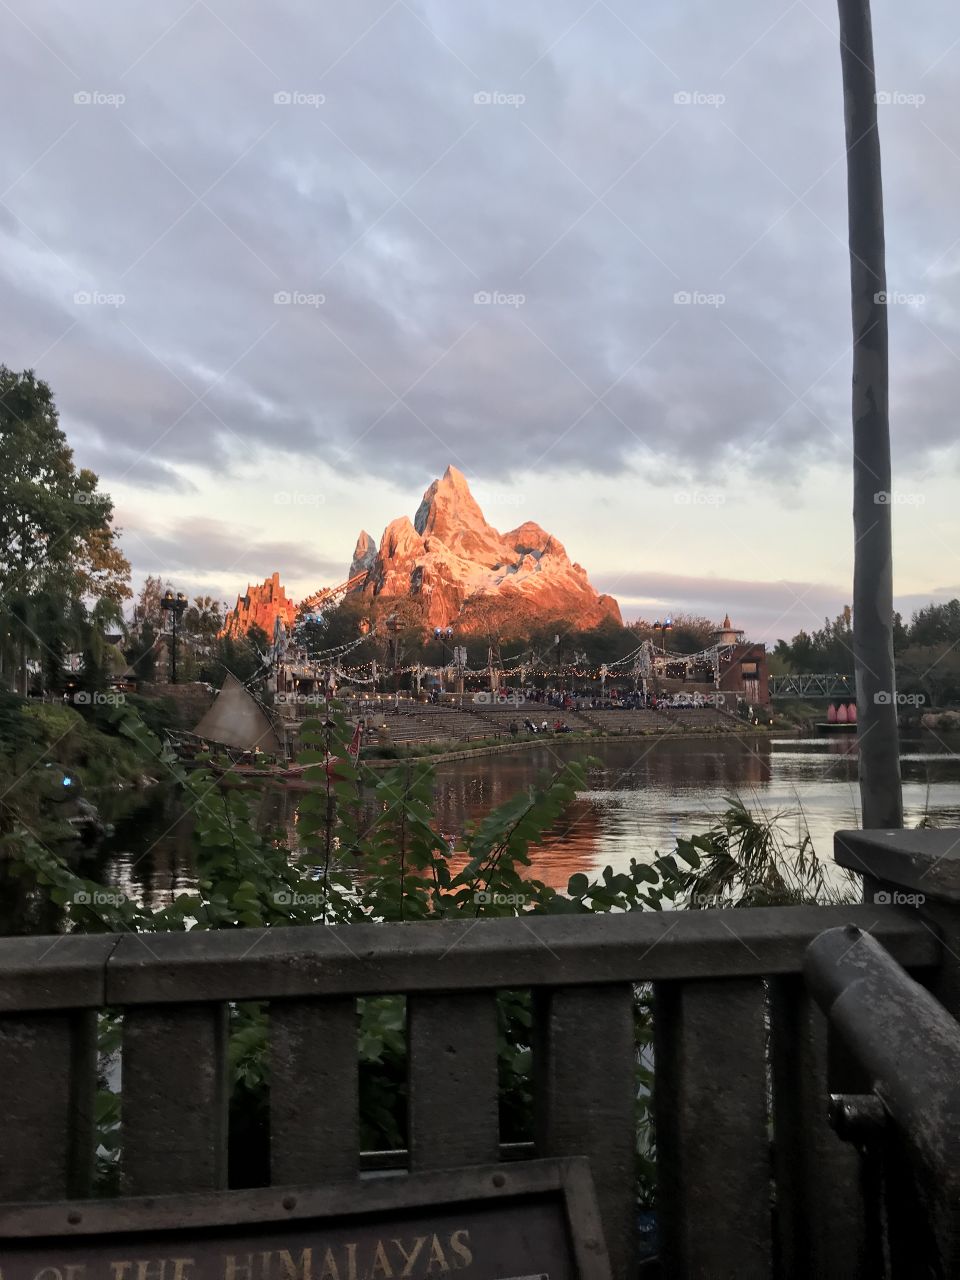 Disney sunset